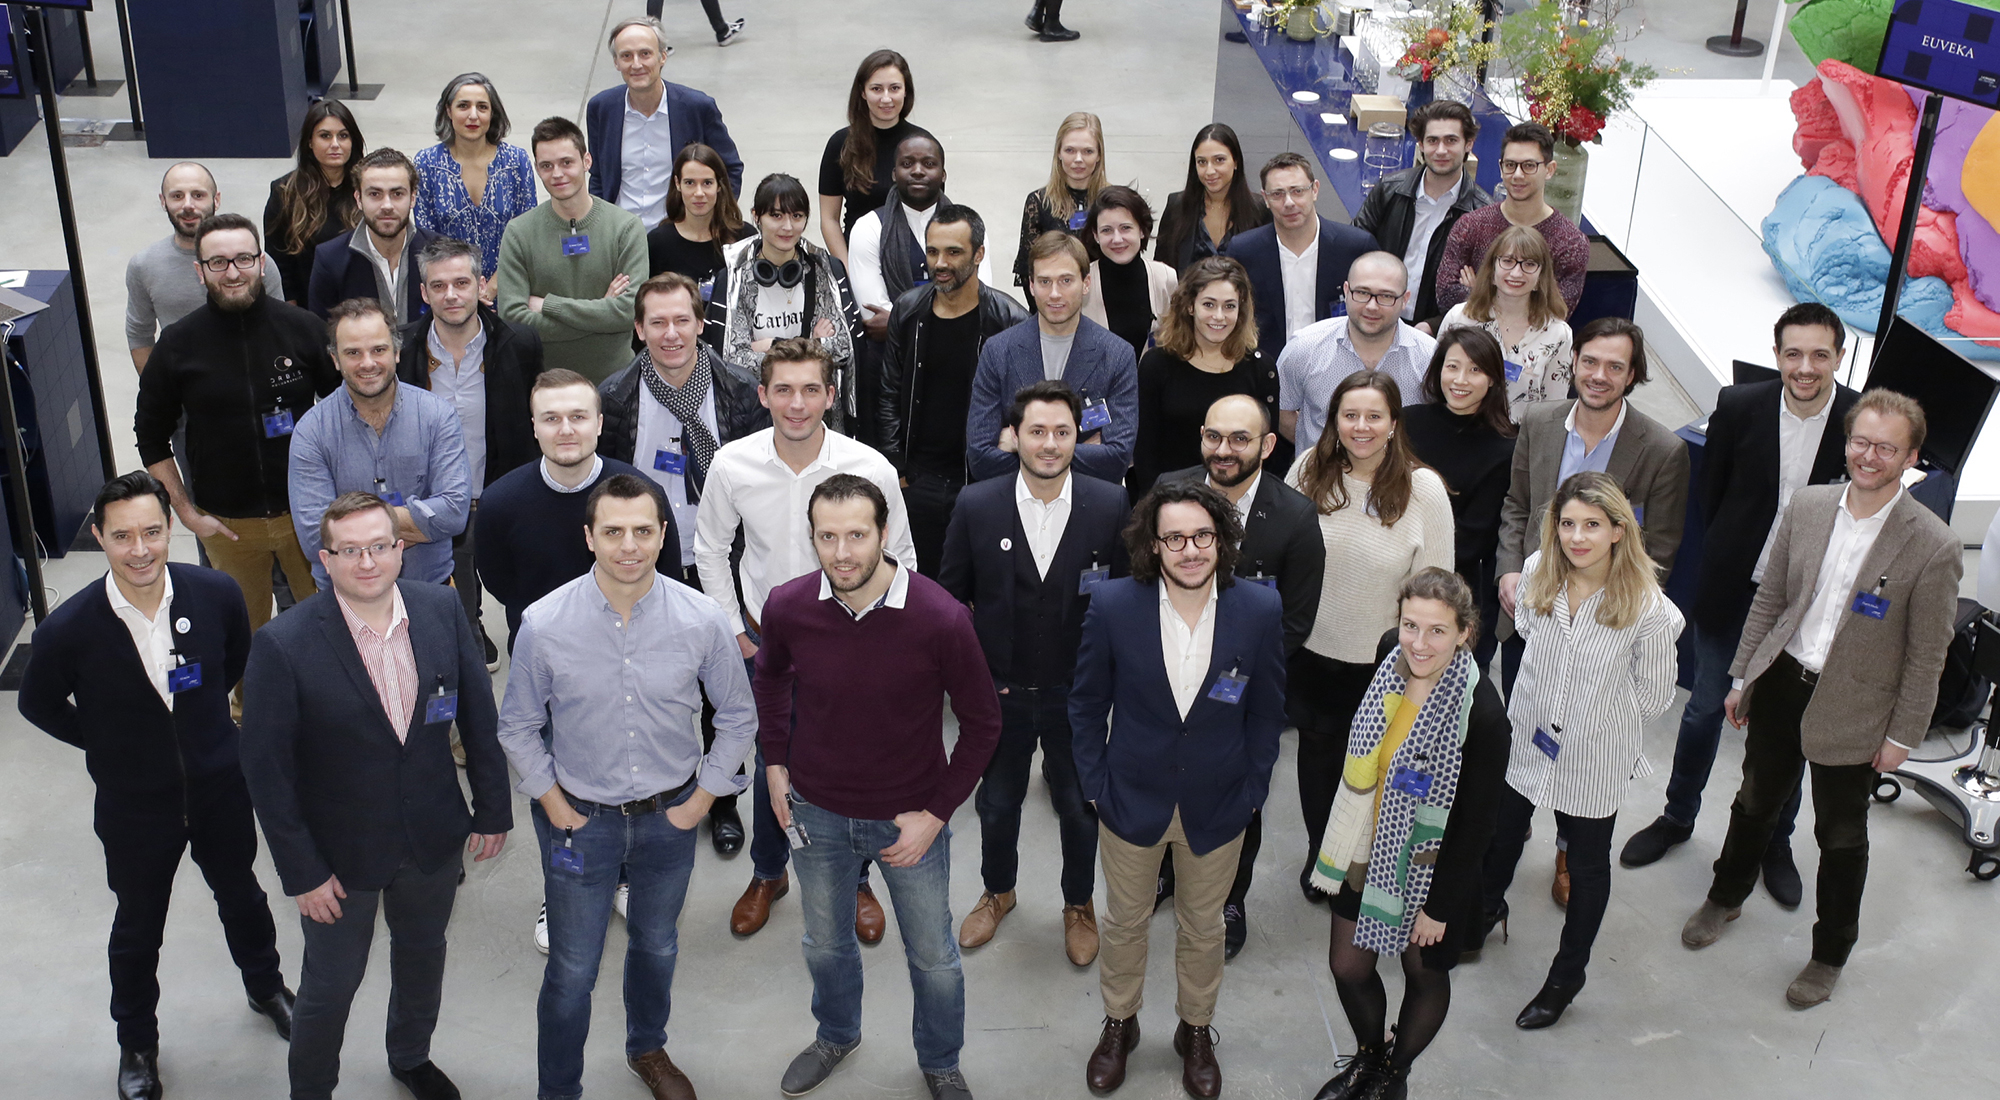 Threedium Announces Participation in La Maison des Startups LVMH